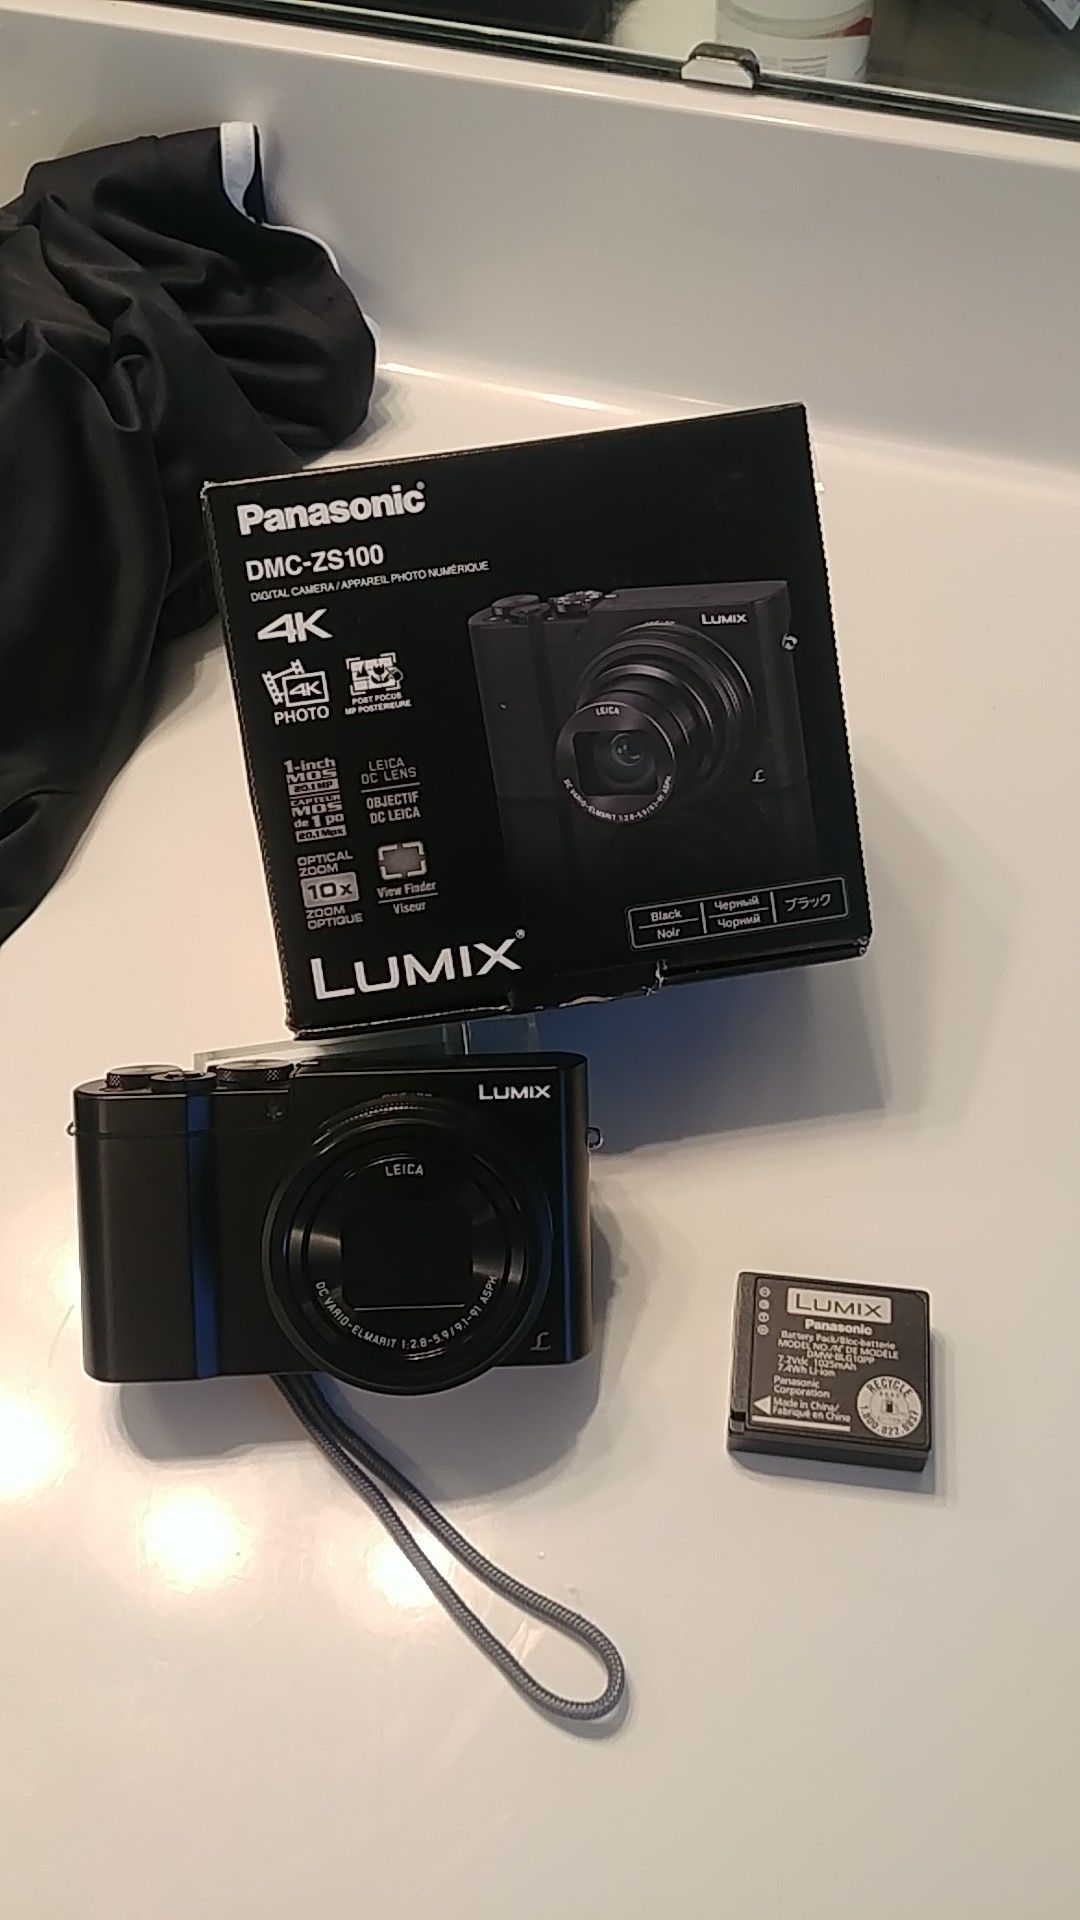 Panasonic DMC-ZS100 digital camera